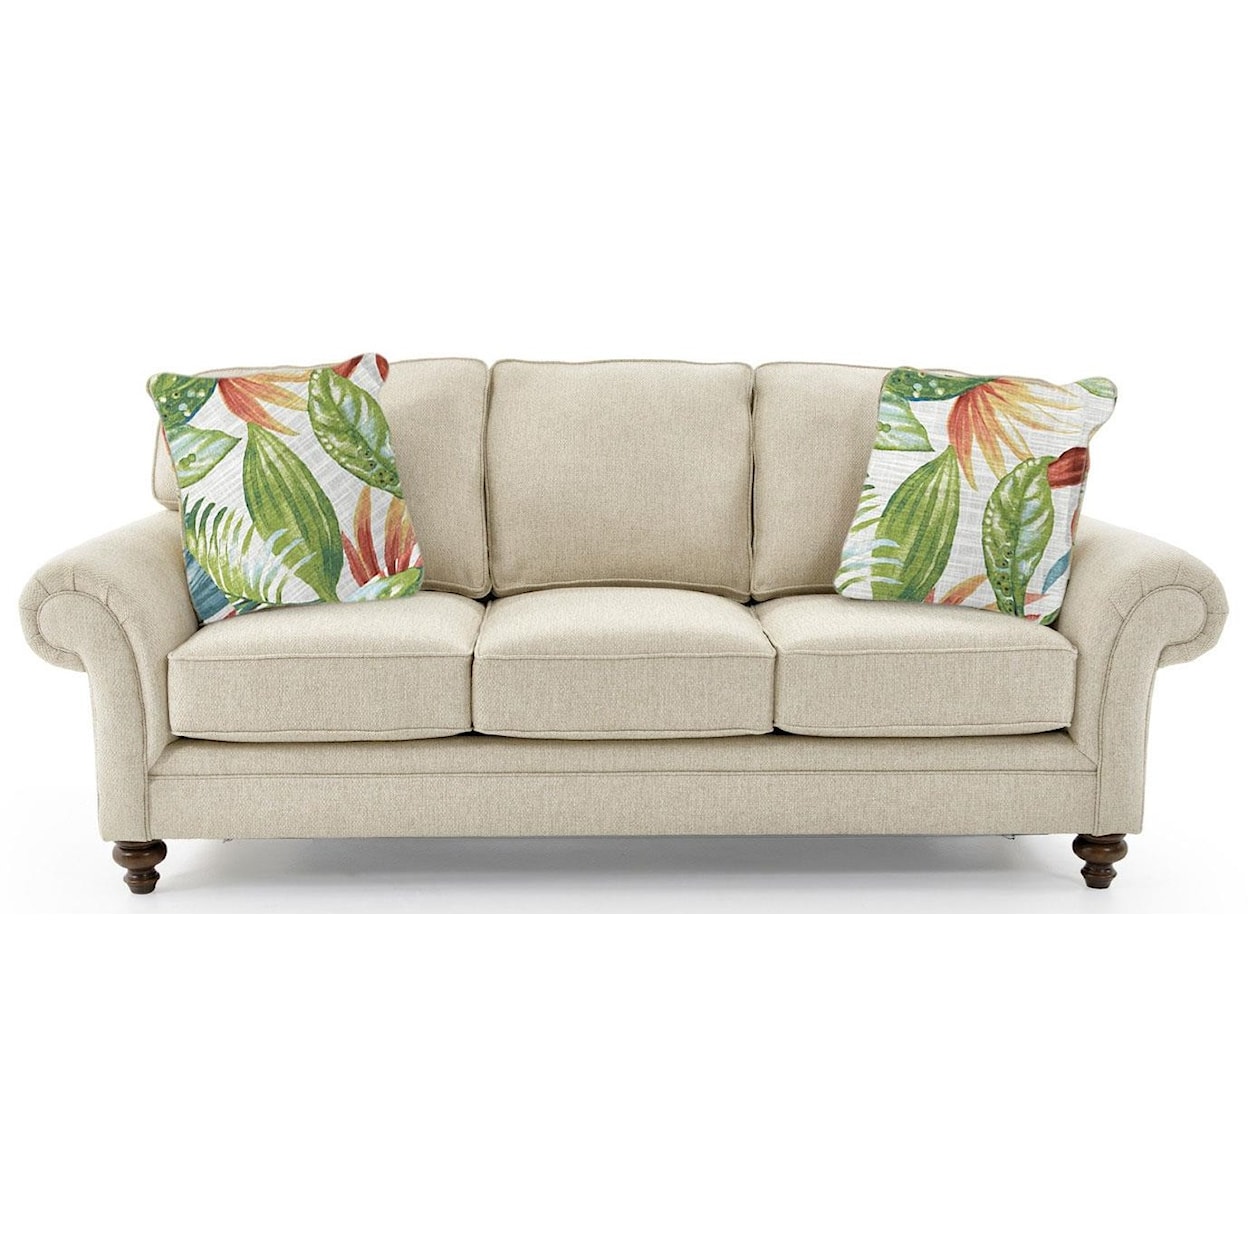 Stone & Leigh Furniture Larissa Rolled Arm Sofa